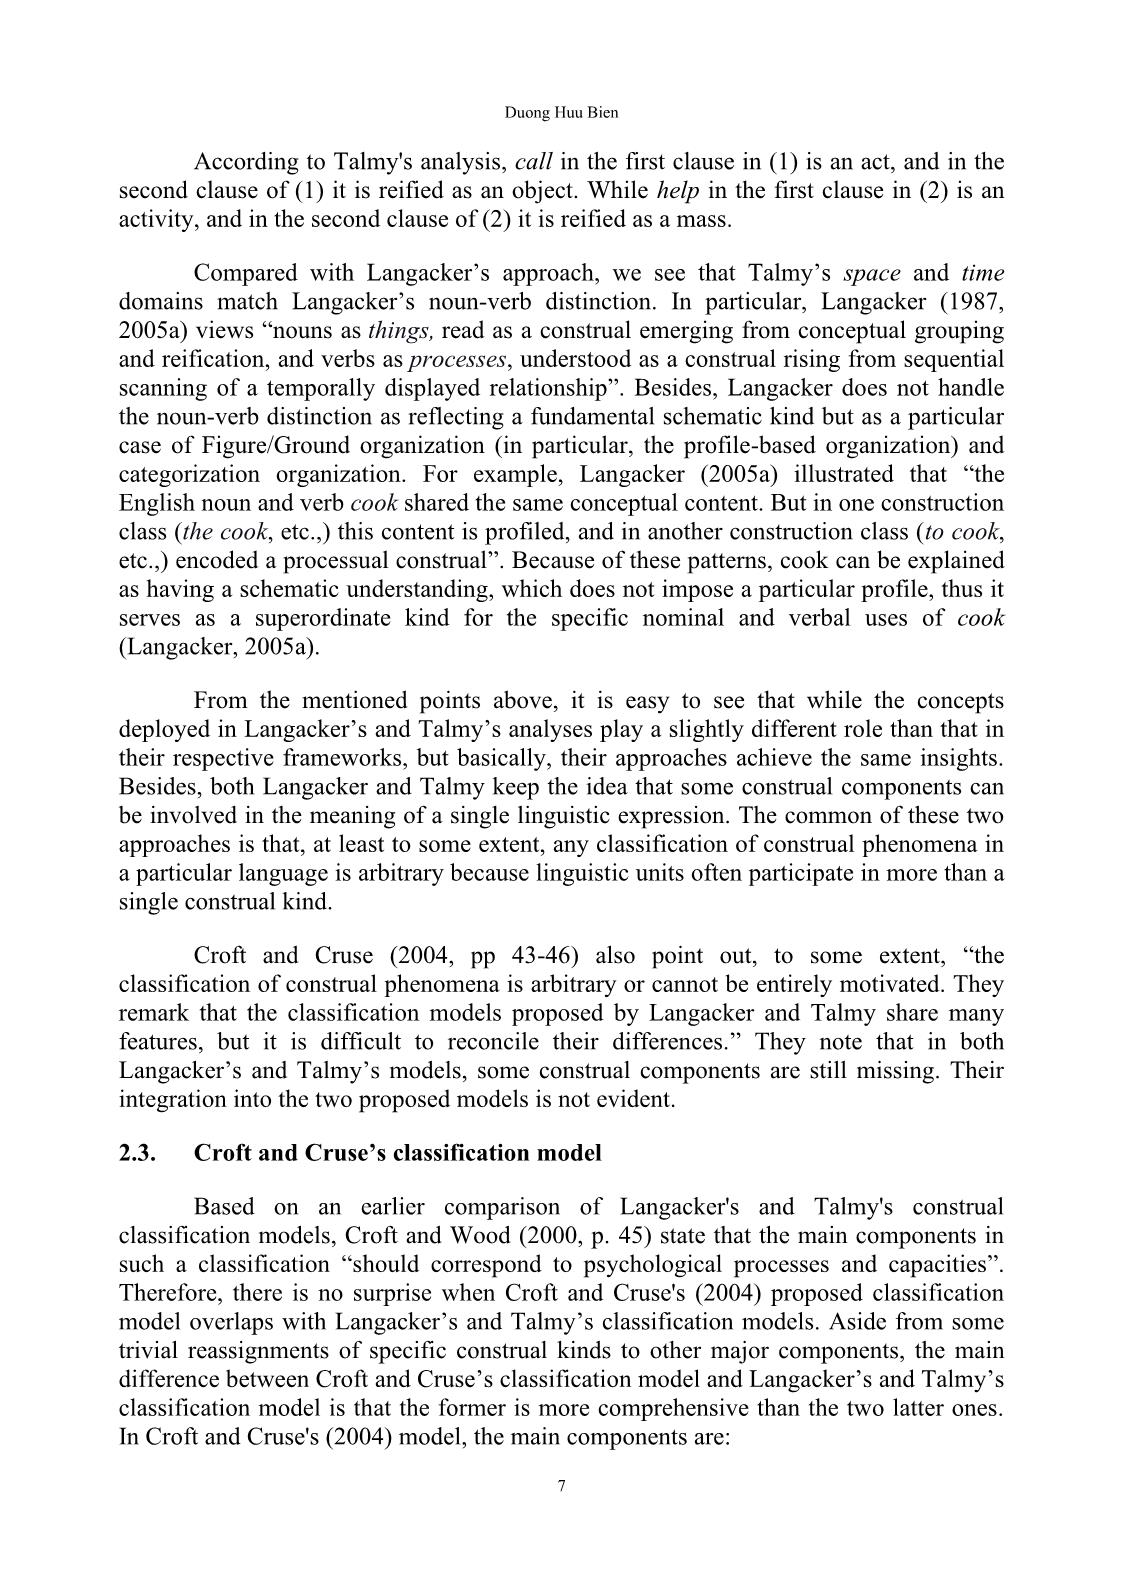 Construal and its representative forms in cognitive linguistics trang 5